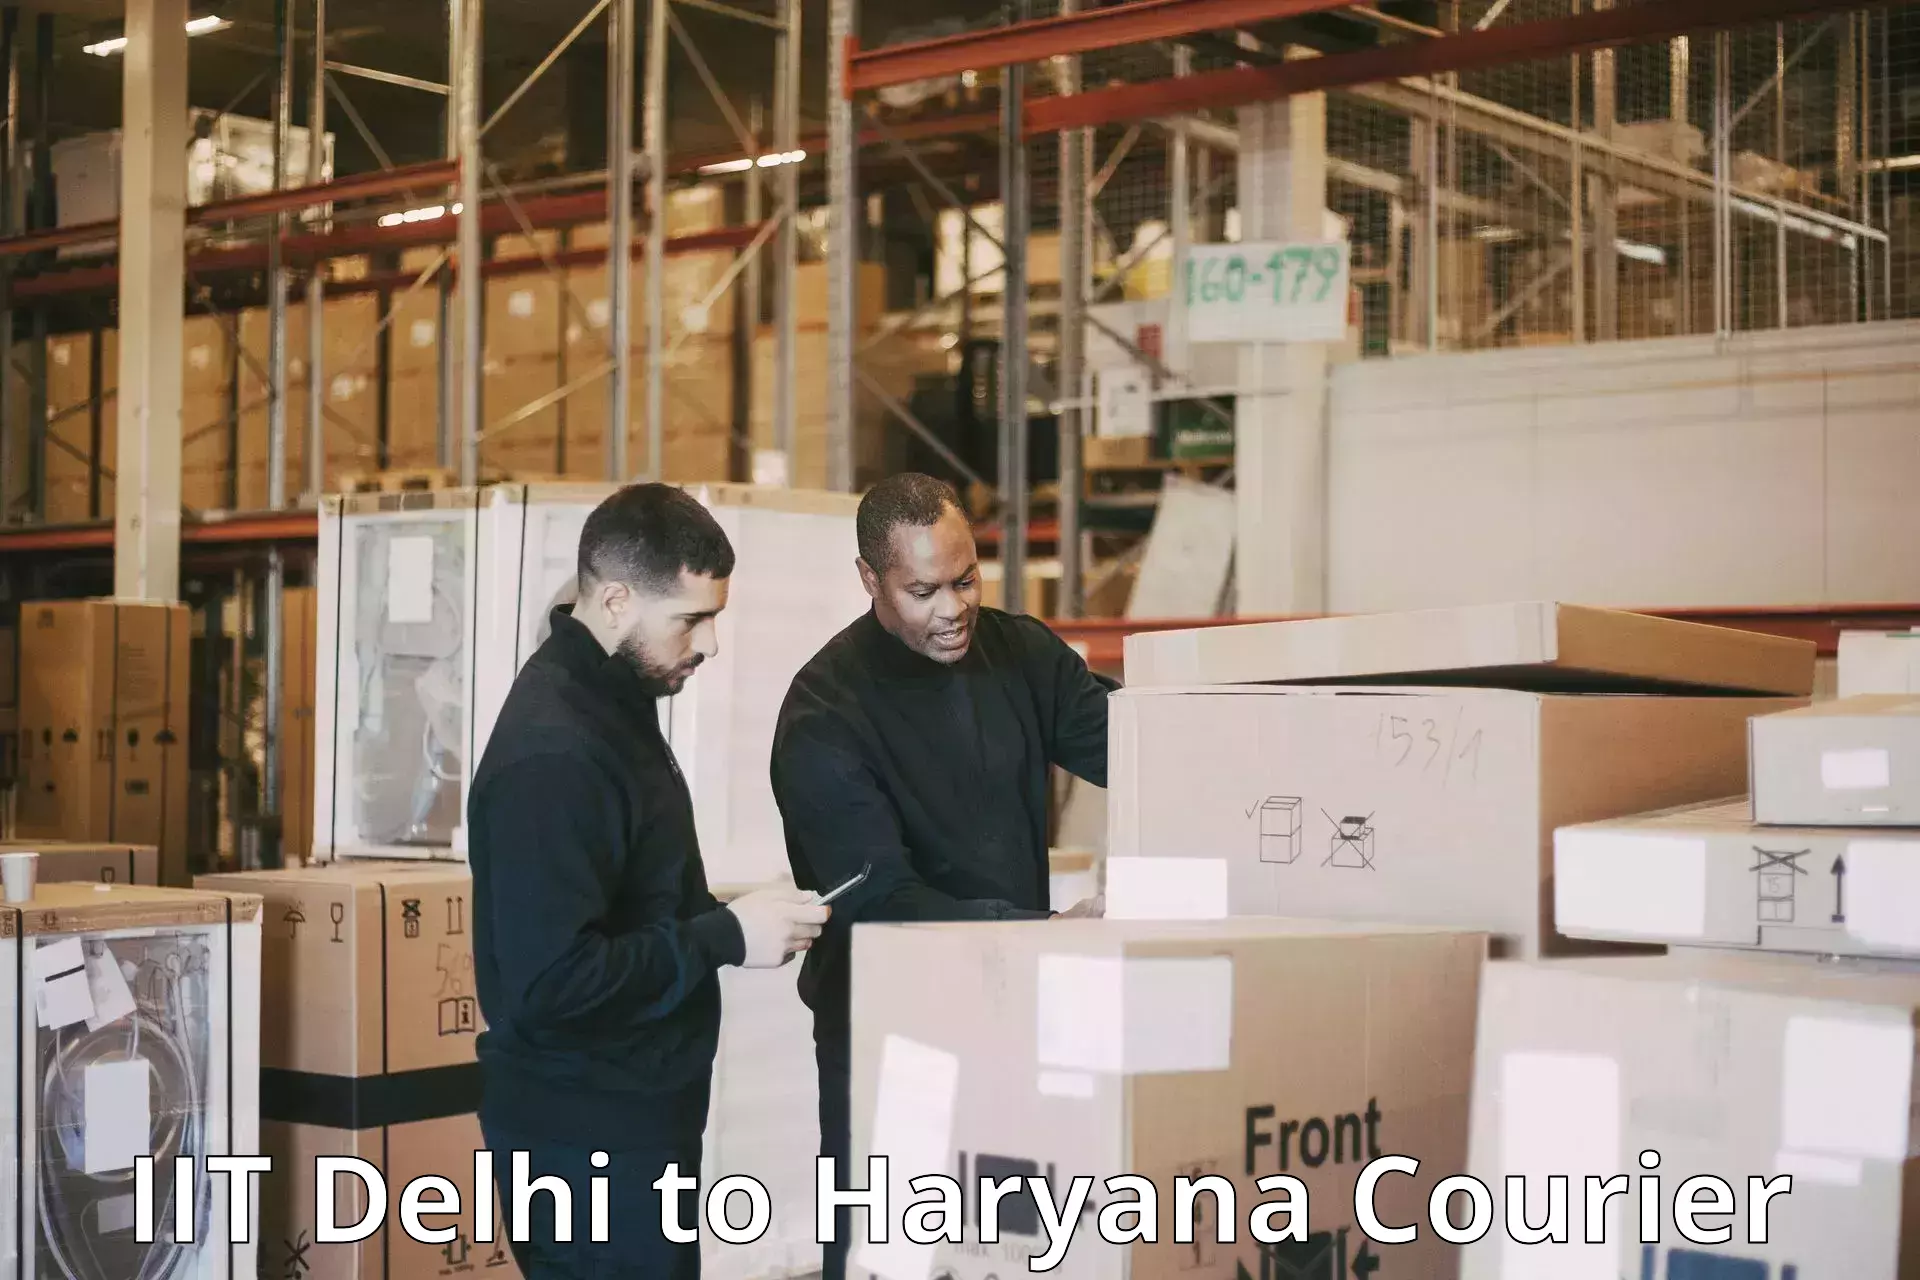 Courier service comparison IIT Delhi to Gurugram